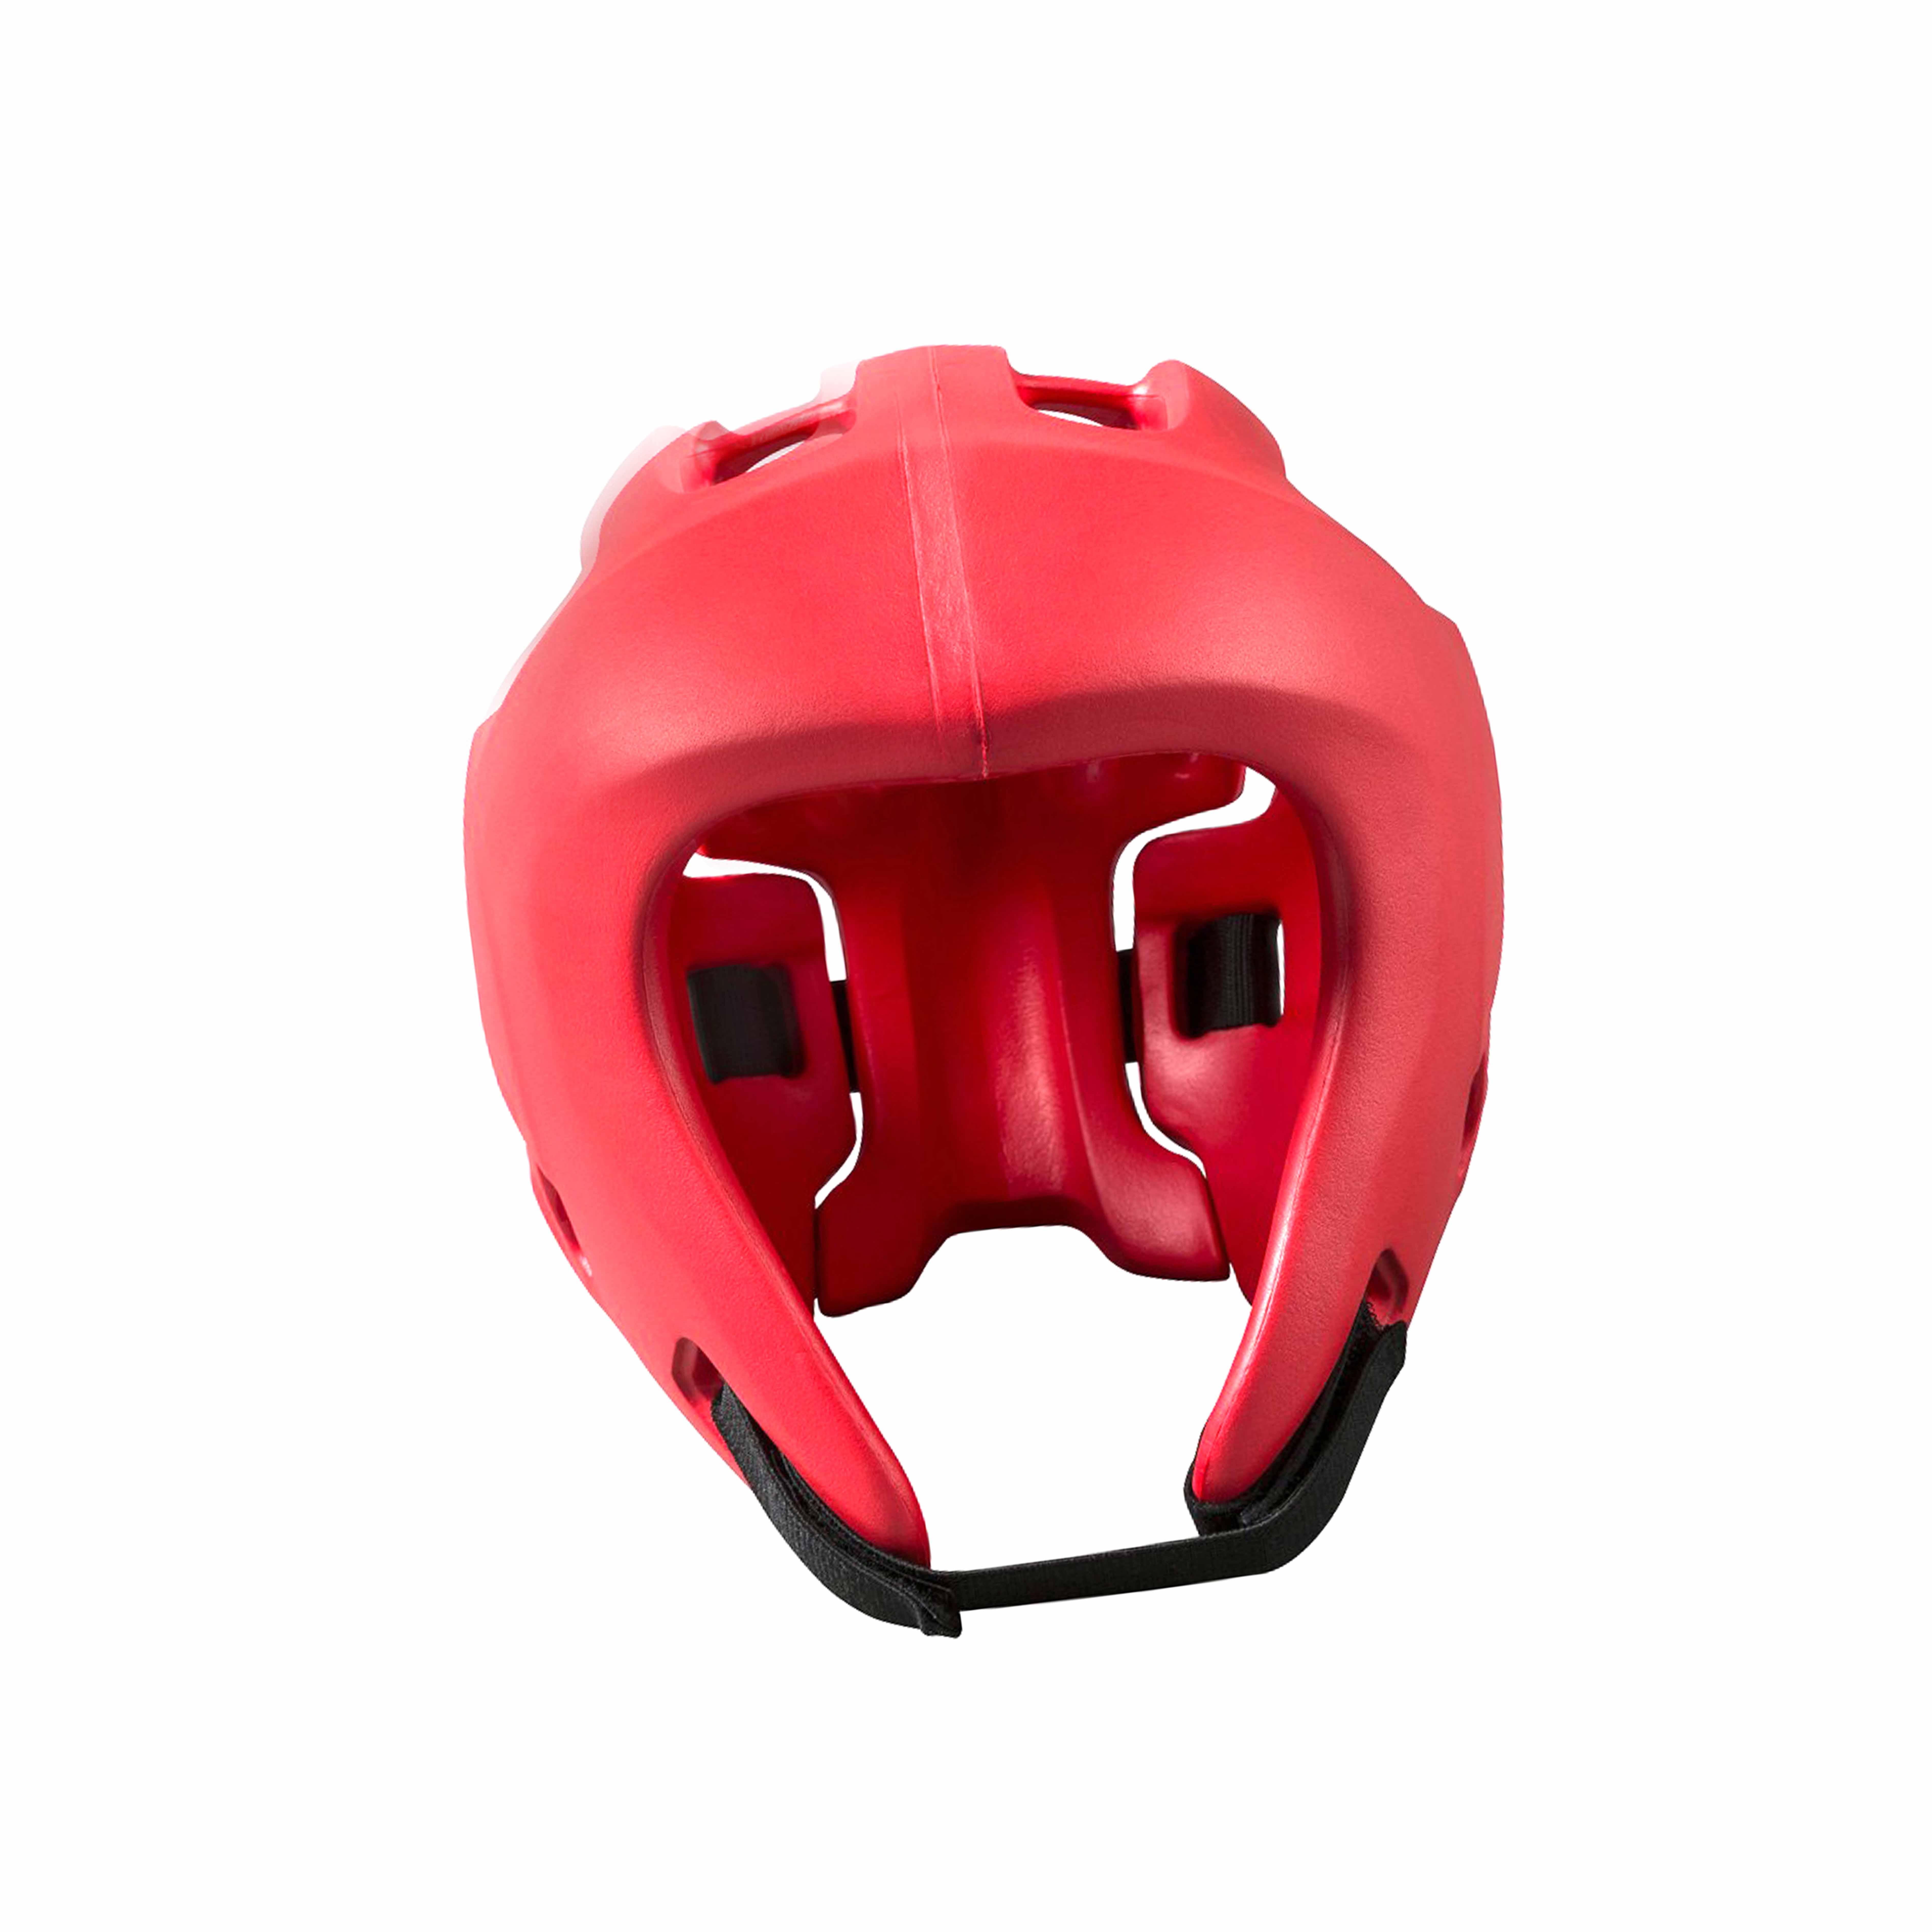 customize polyurethane headguard PU foam teakondo martial art protector boxing helmet